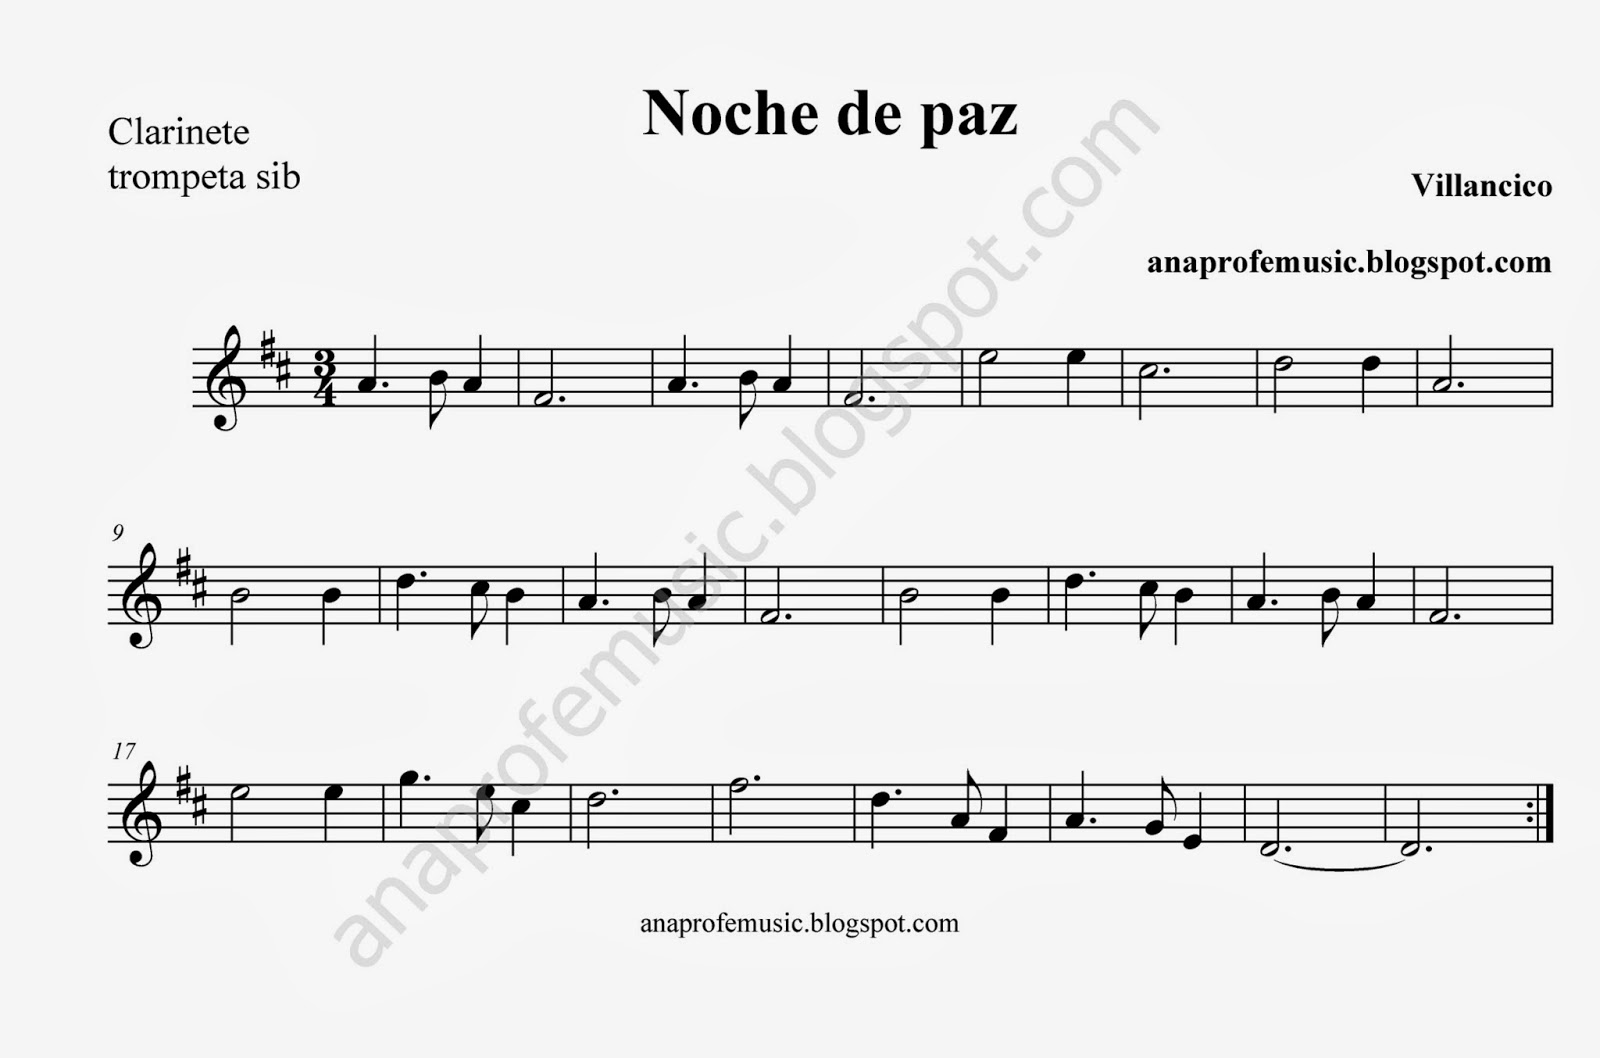 arma mineral escalar AnaProfeMusic: Partitura Villancico Noche de Paz - Silent Night Sheet Music